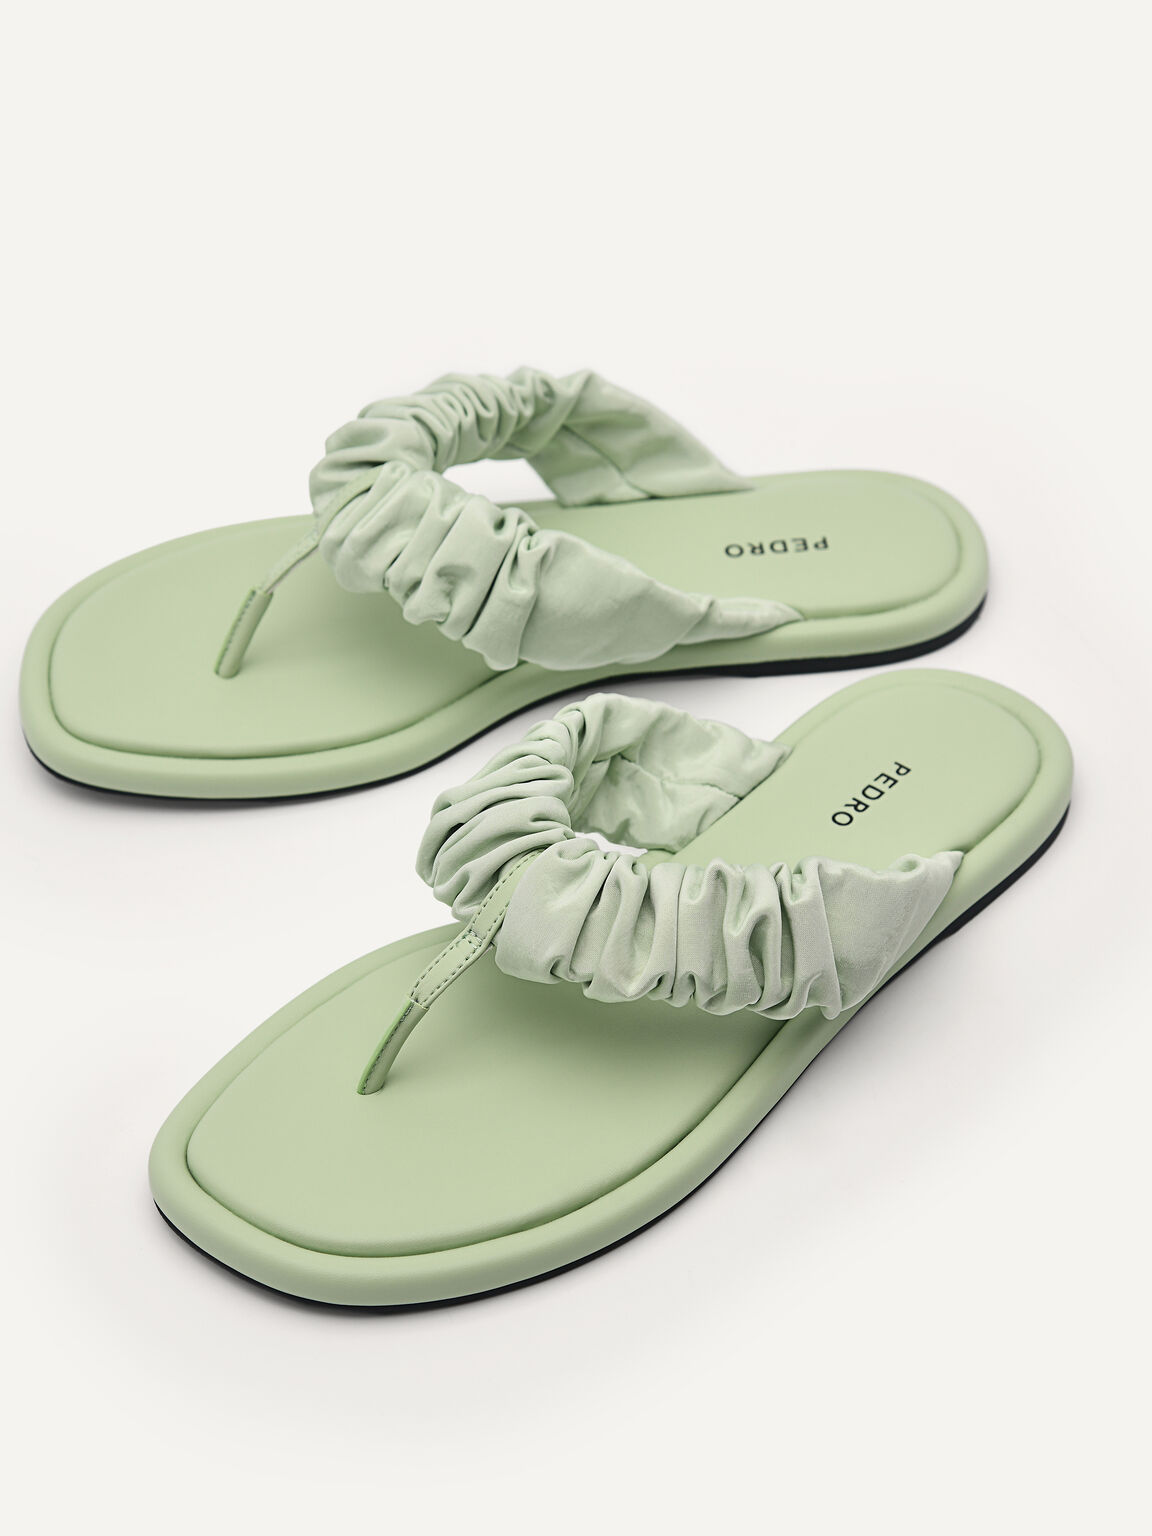 Crepe Sandals, Light Green